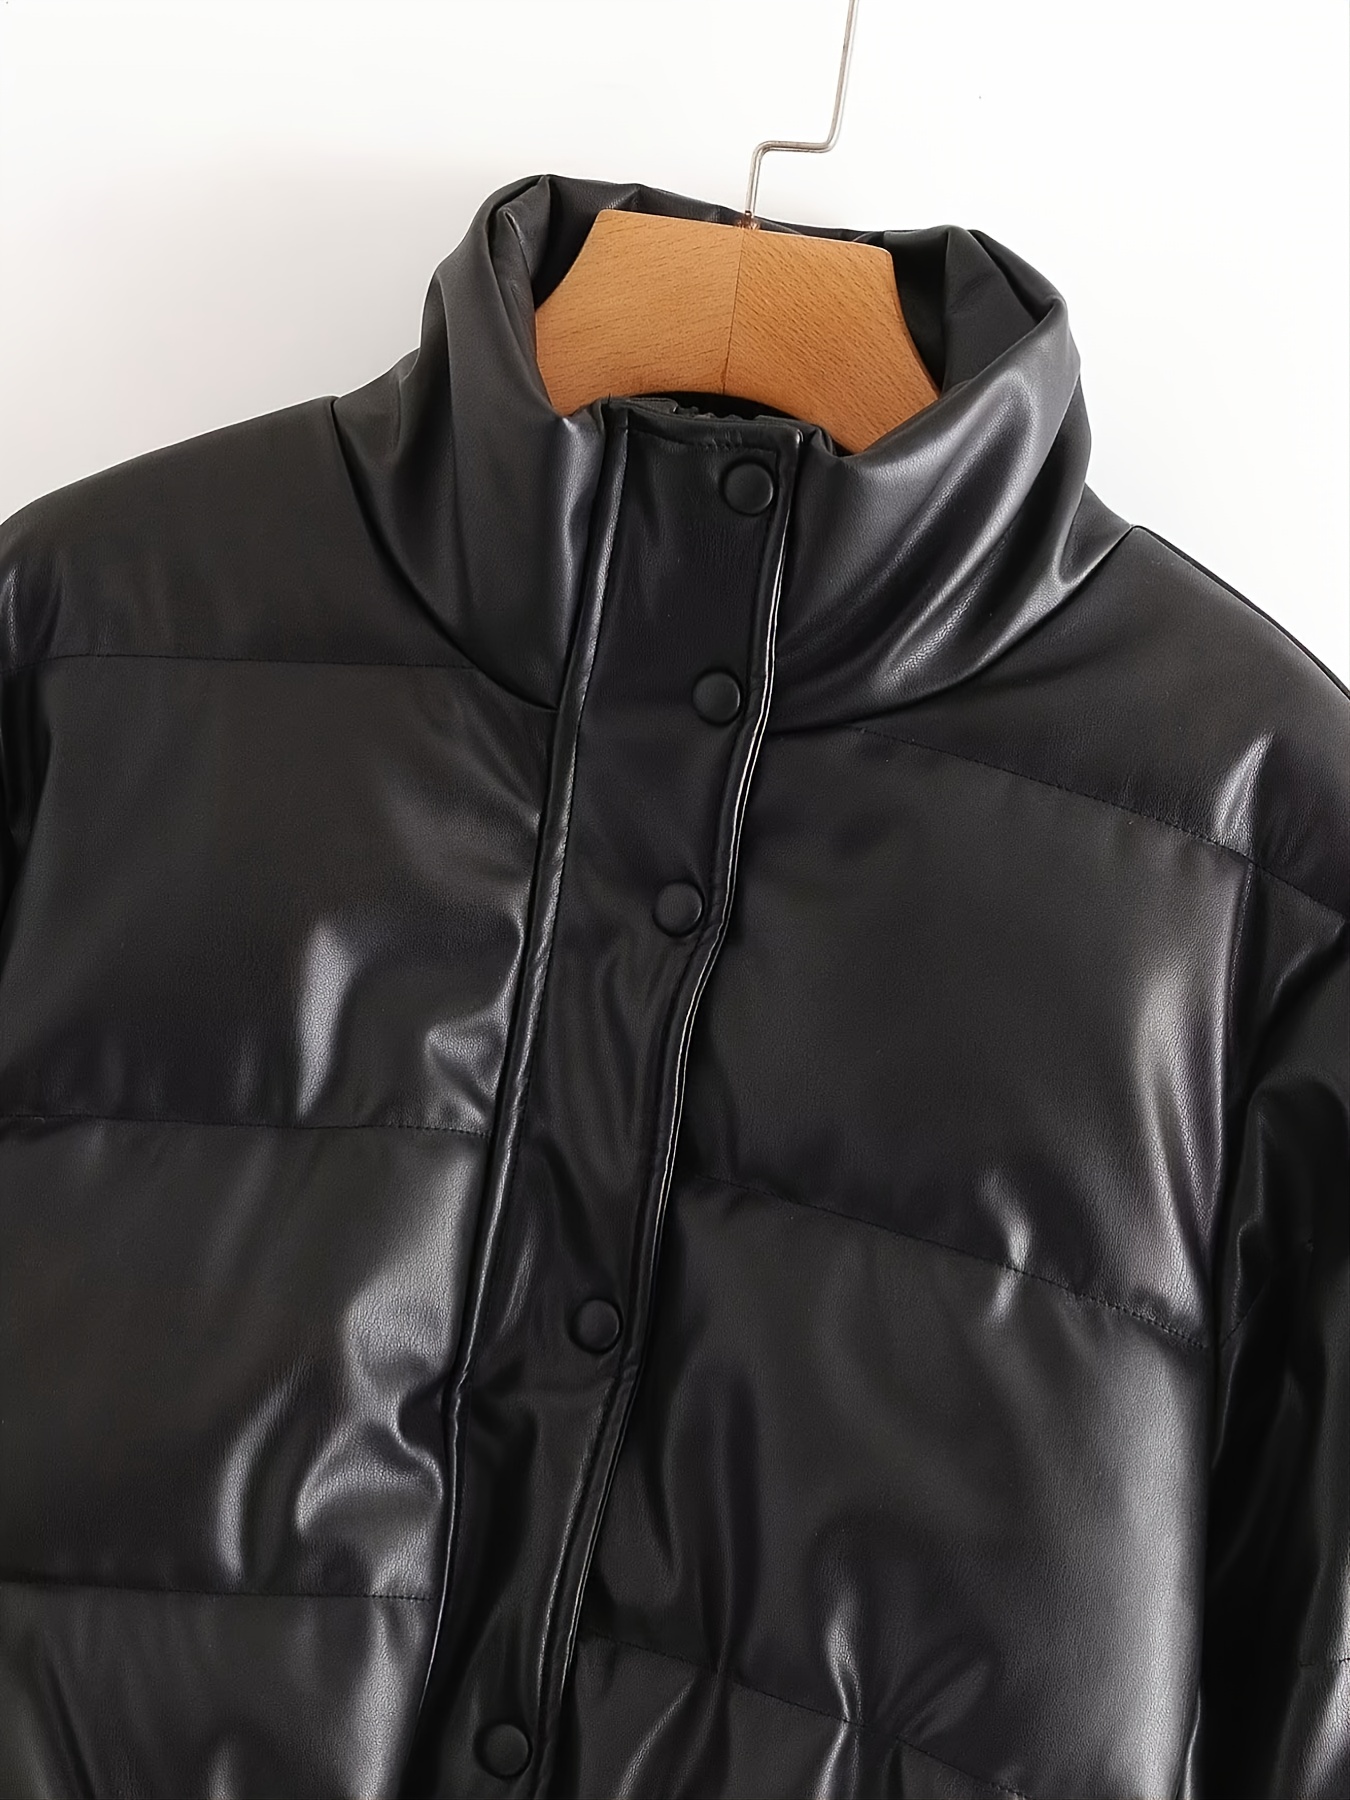 Zara TRF High Neck Crop Puffer Jacket Coat Shiny Black Warm Size